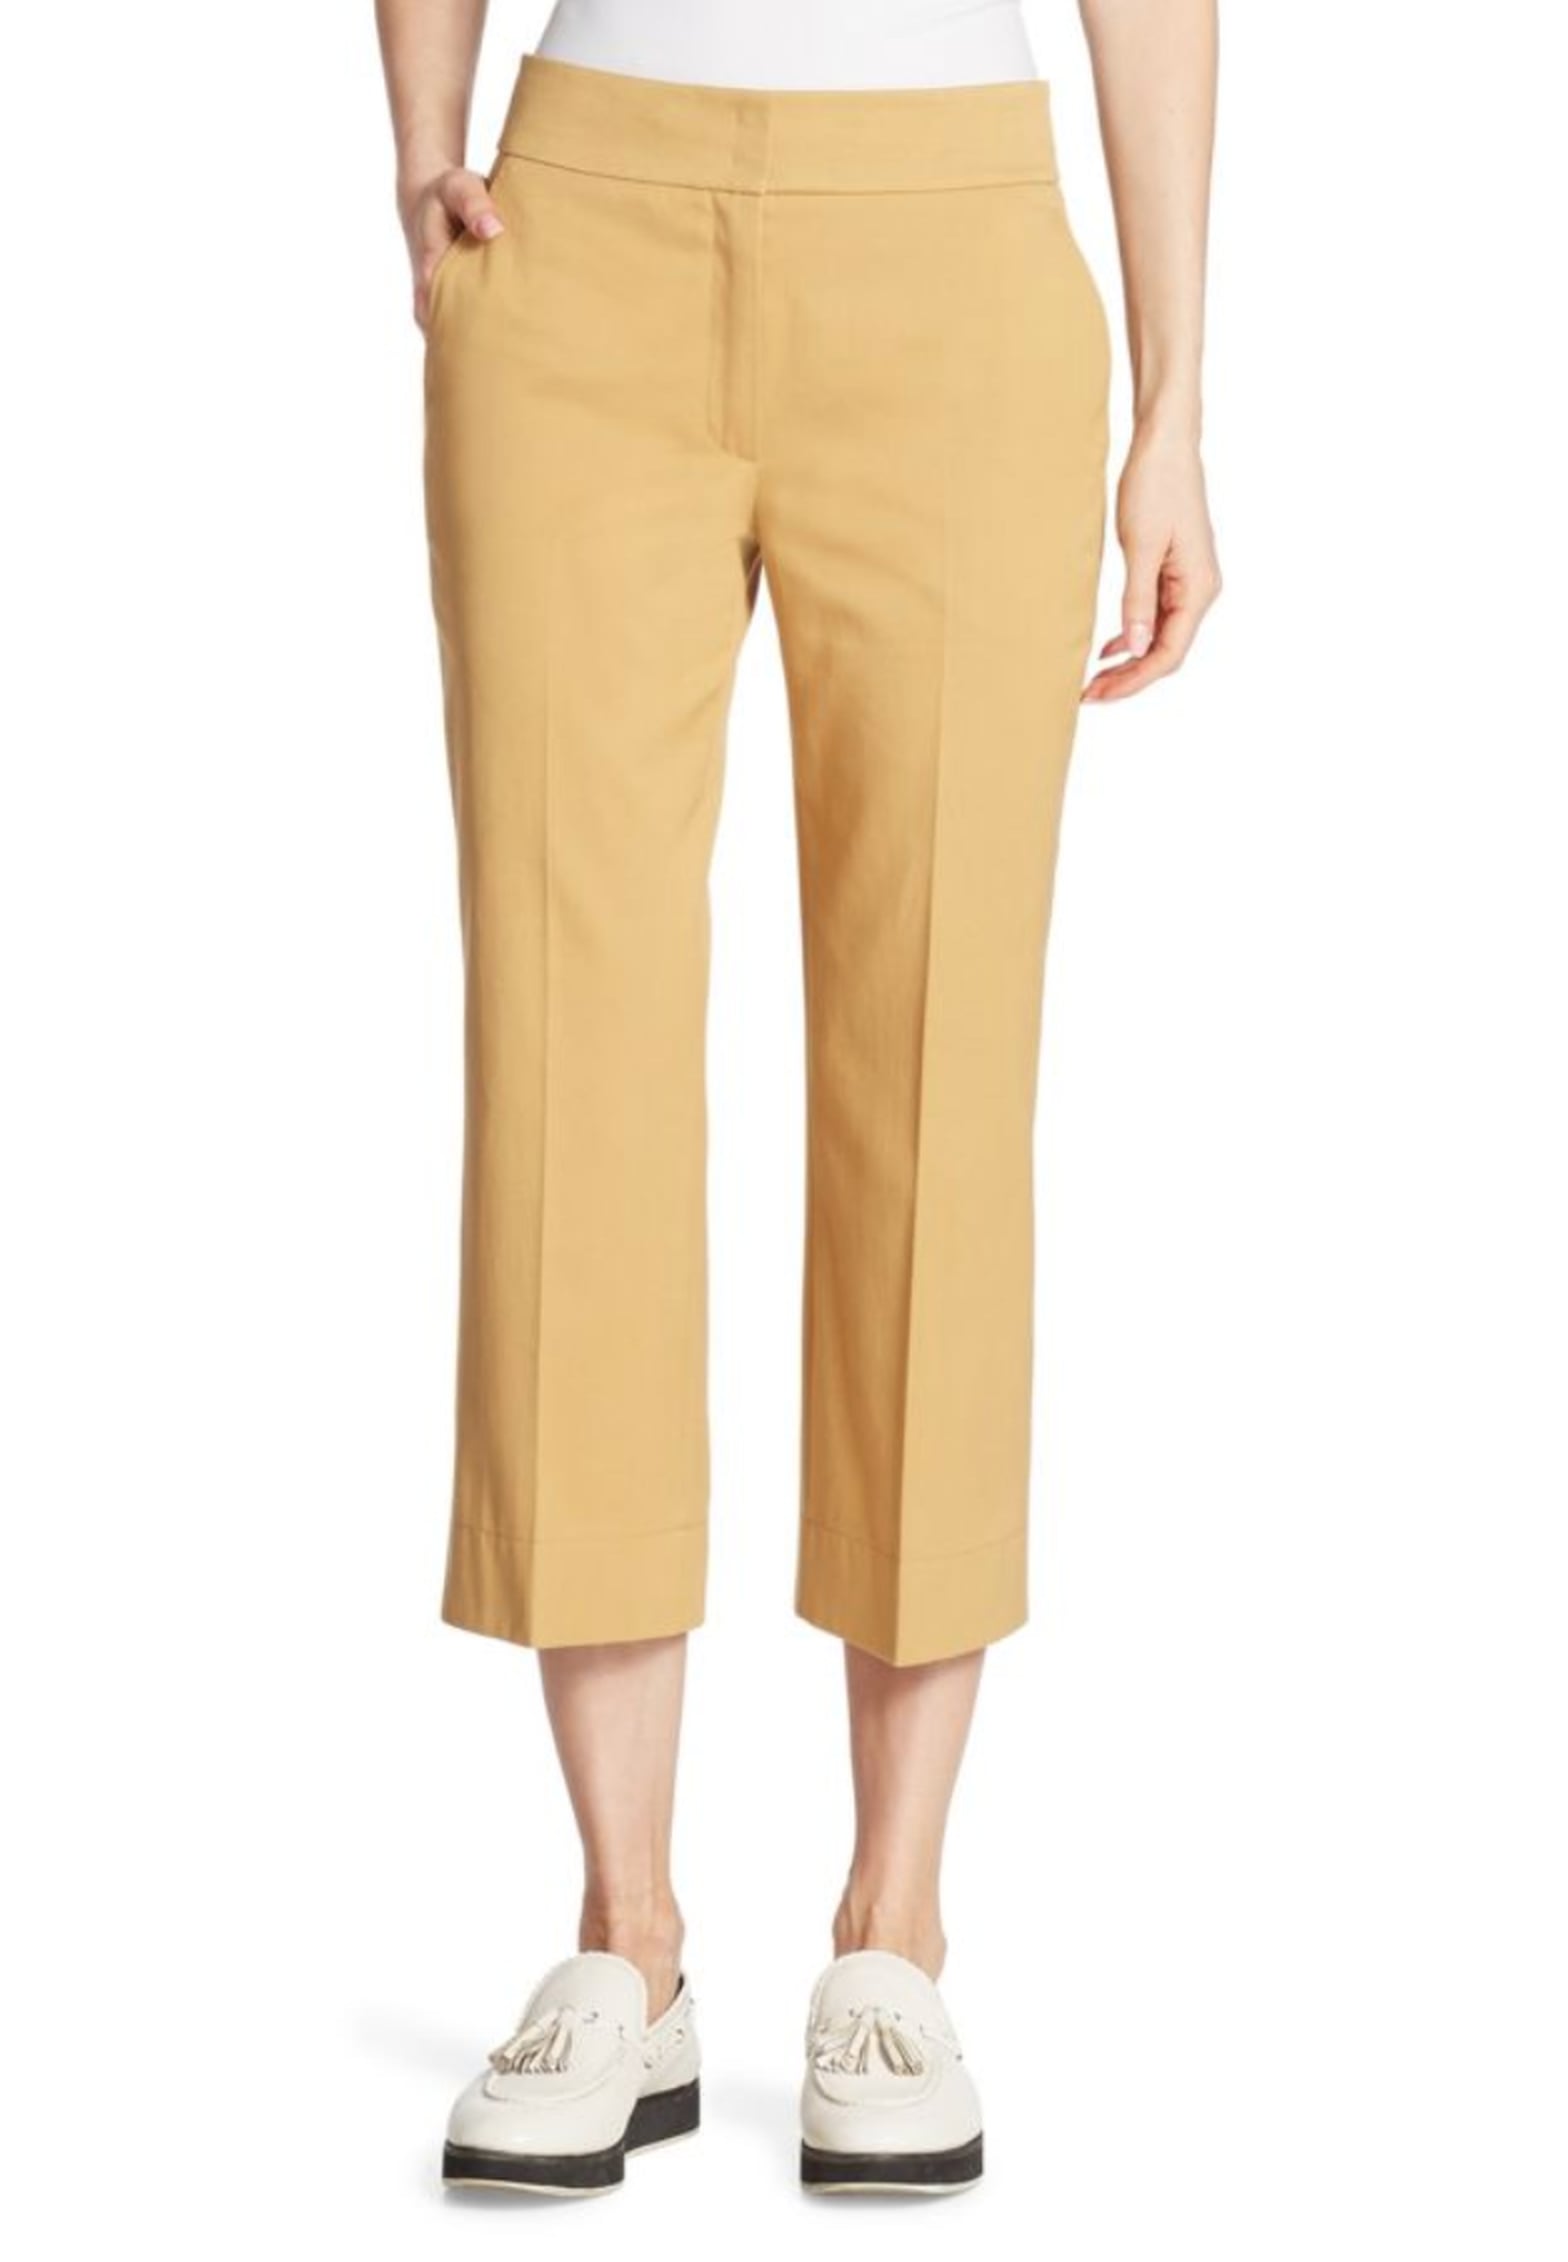 Victoria Beckham Yellow Pants at Harper's Bazaar Awards | POPSUGAR Fashion